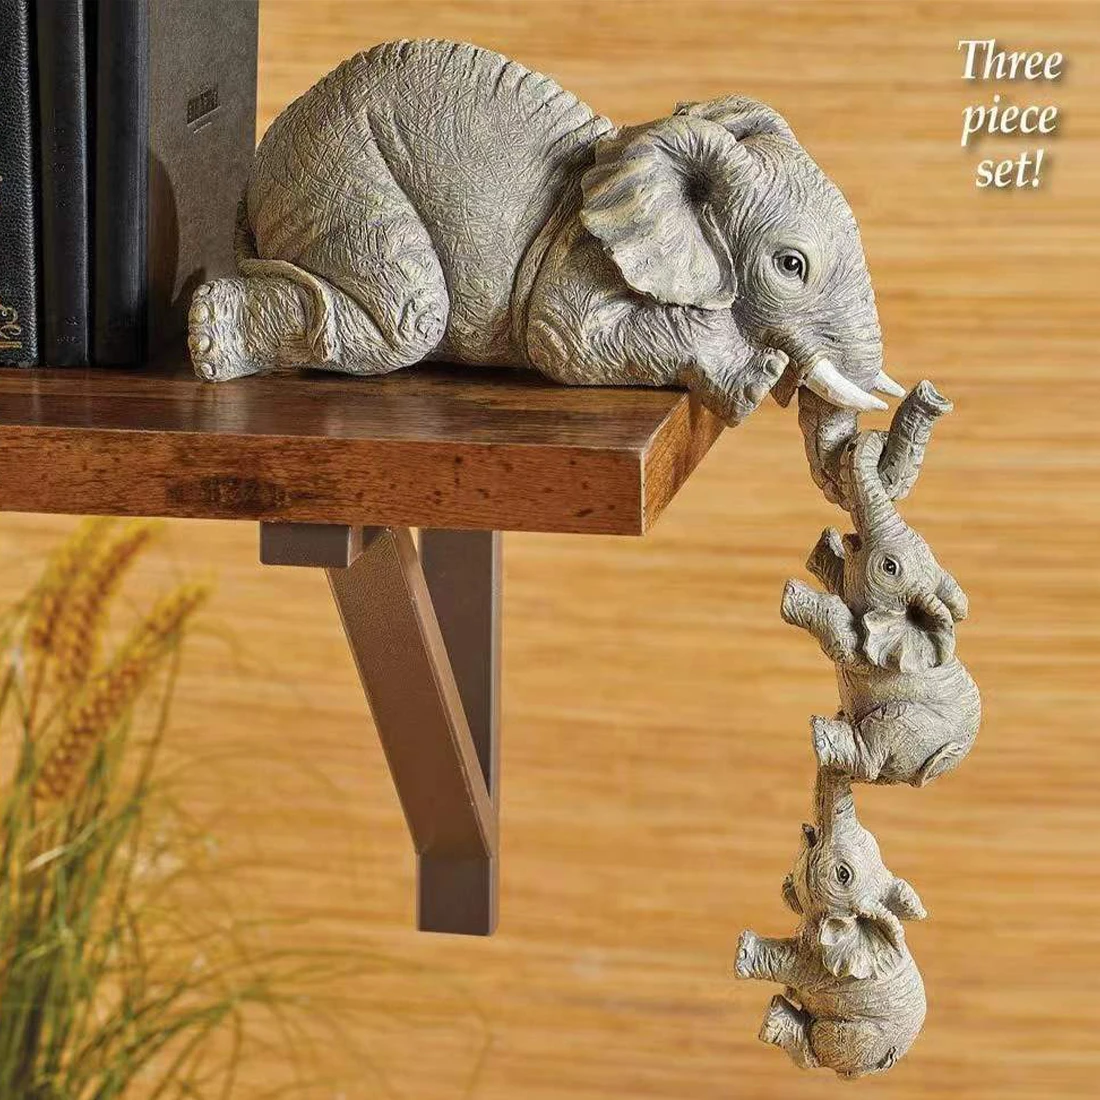 

3PCS/Set Cute Elephant Figurines Elephant Holding Baby Elephant Resin Crafts Home Furnishing Gift Desktop Decor